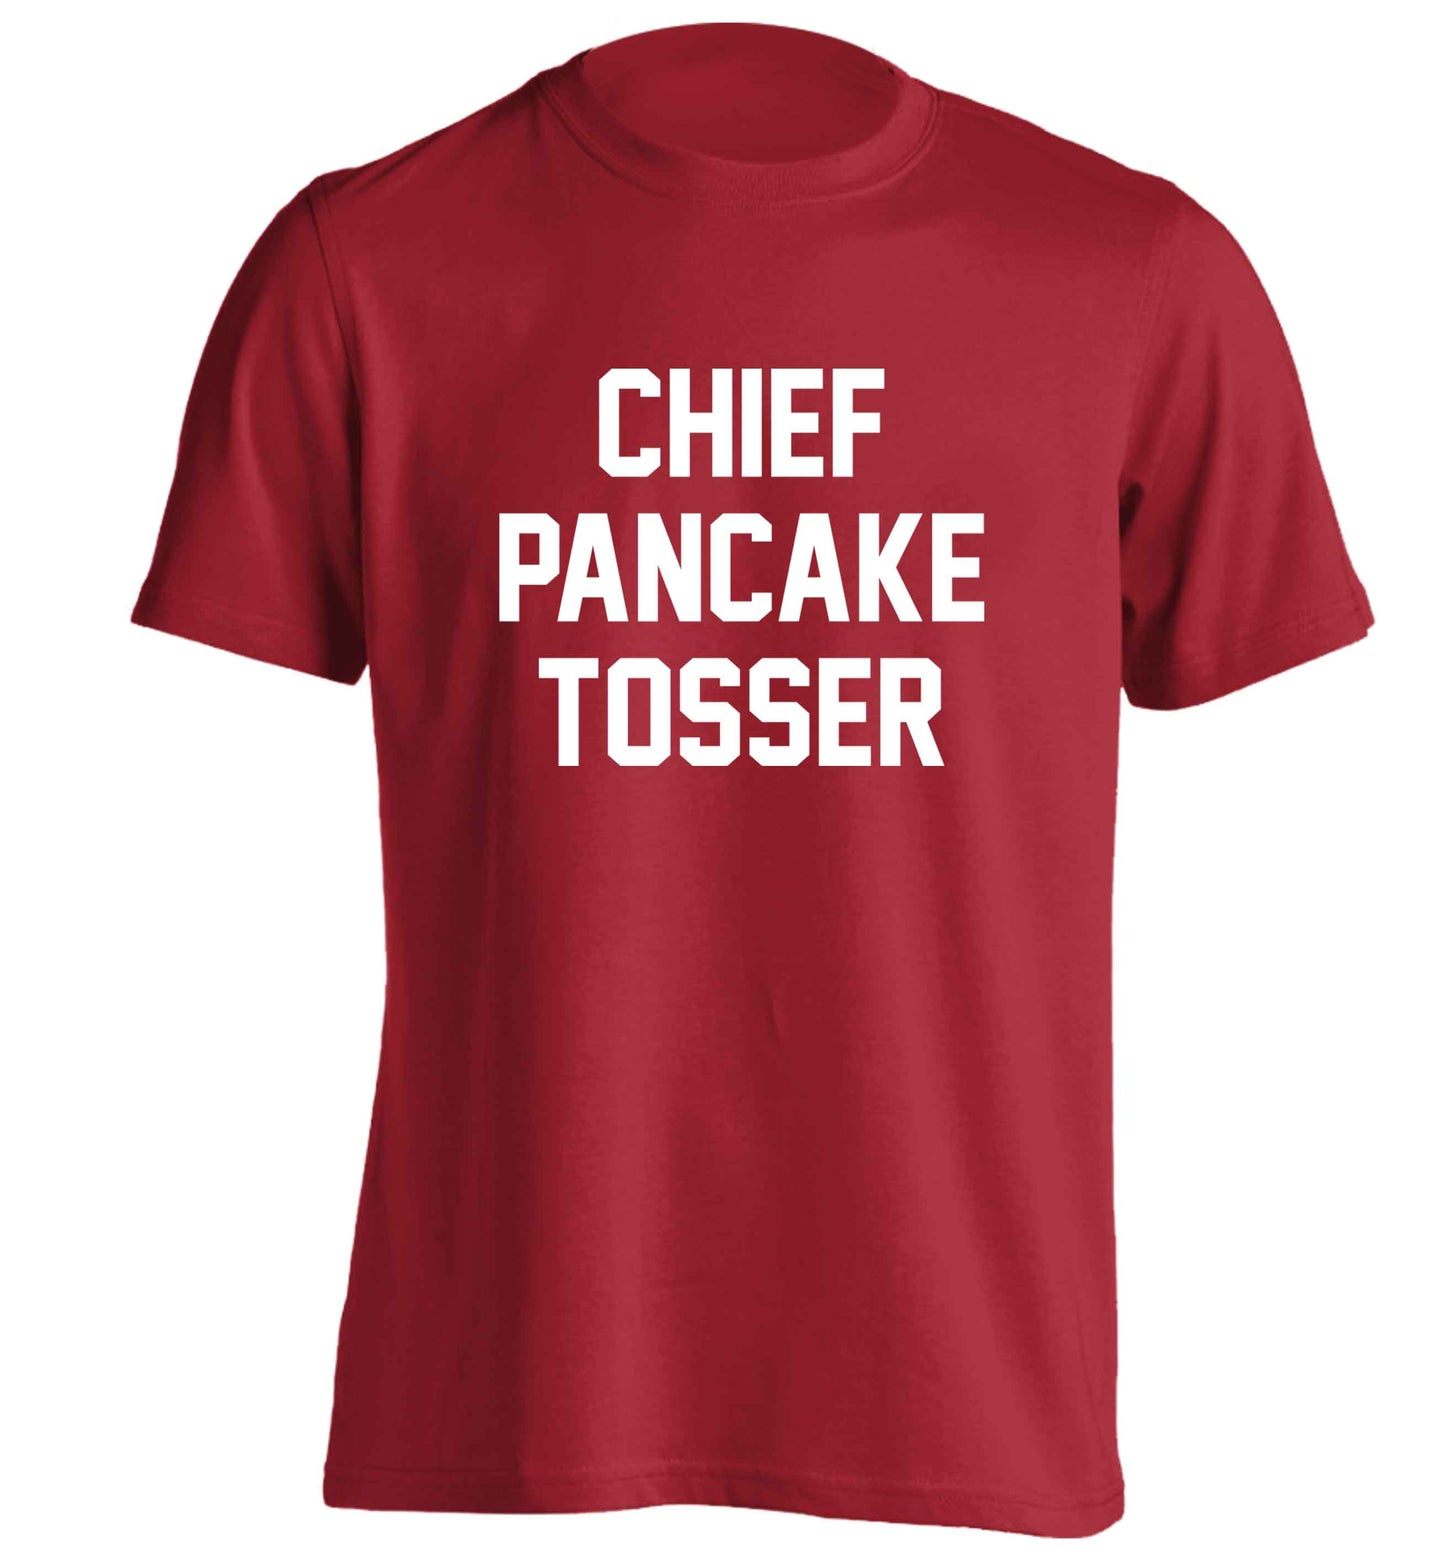 Chief pancake tosser adults unisex red Tshirt 2XL